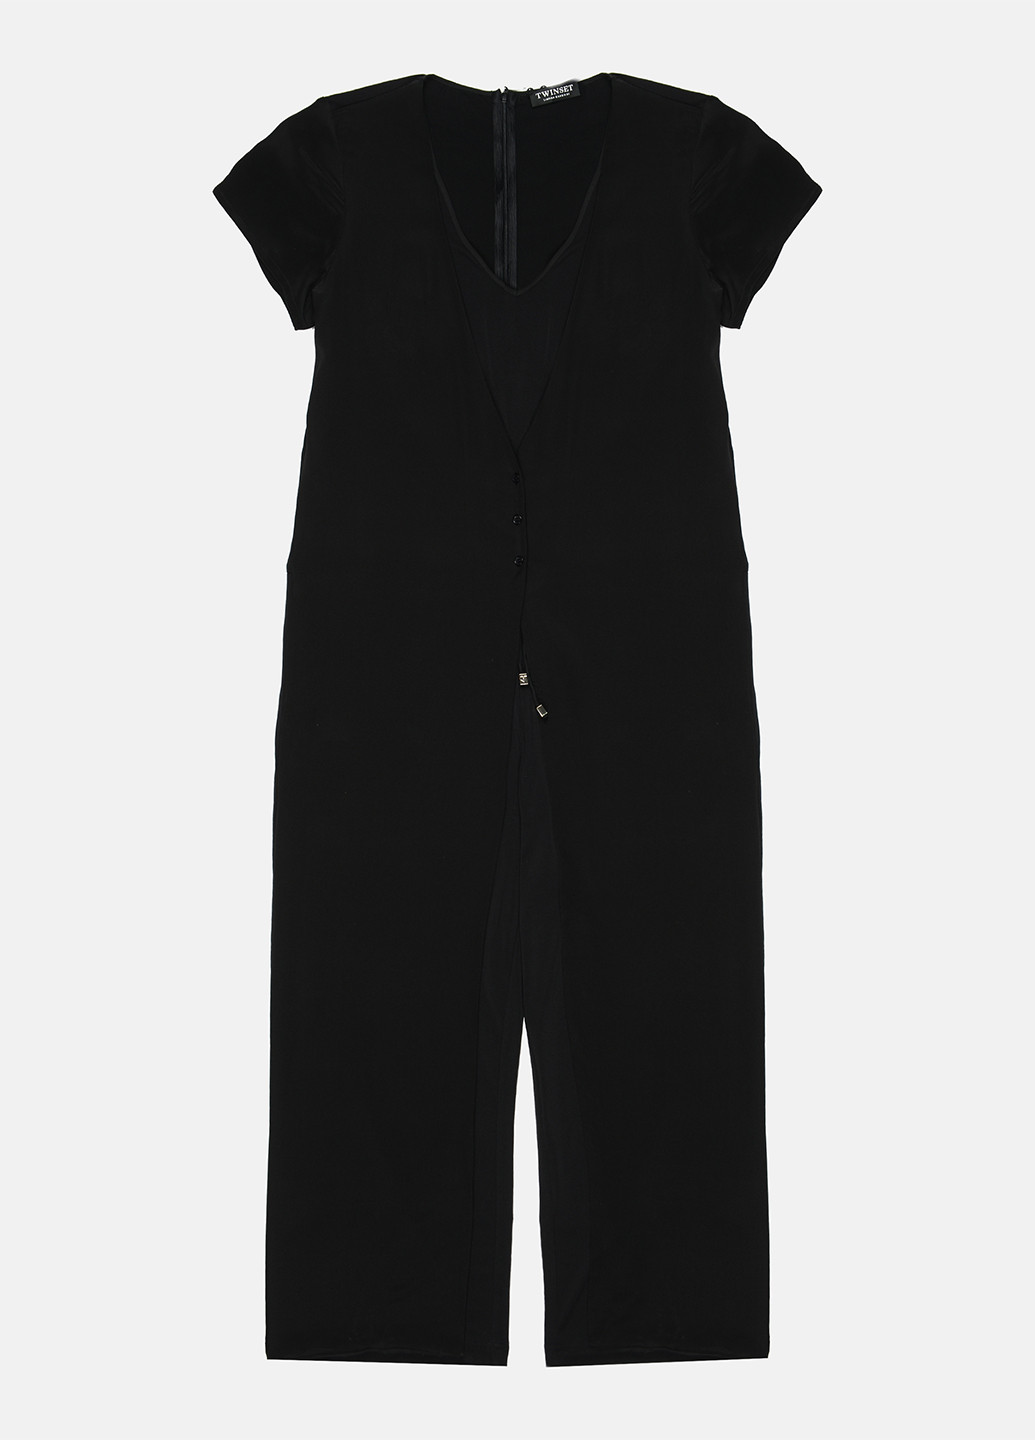 Комбинезон Twin-Set комбинезон-брюки однотонный чёрный кэжуал трикотаж, полиэстер